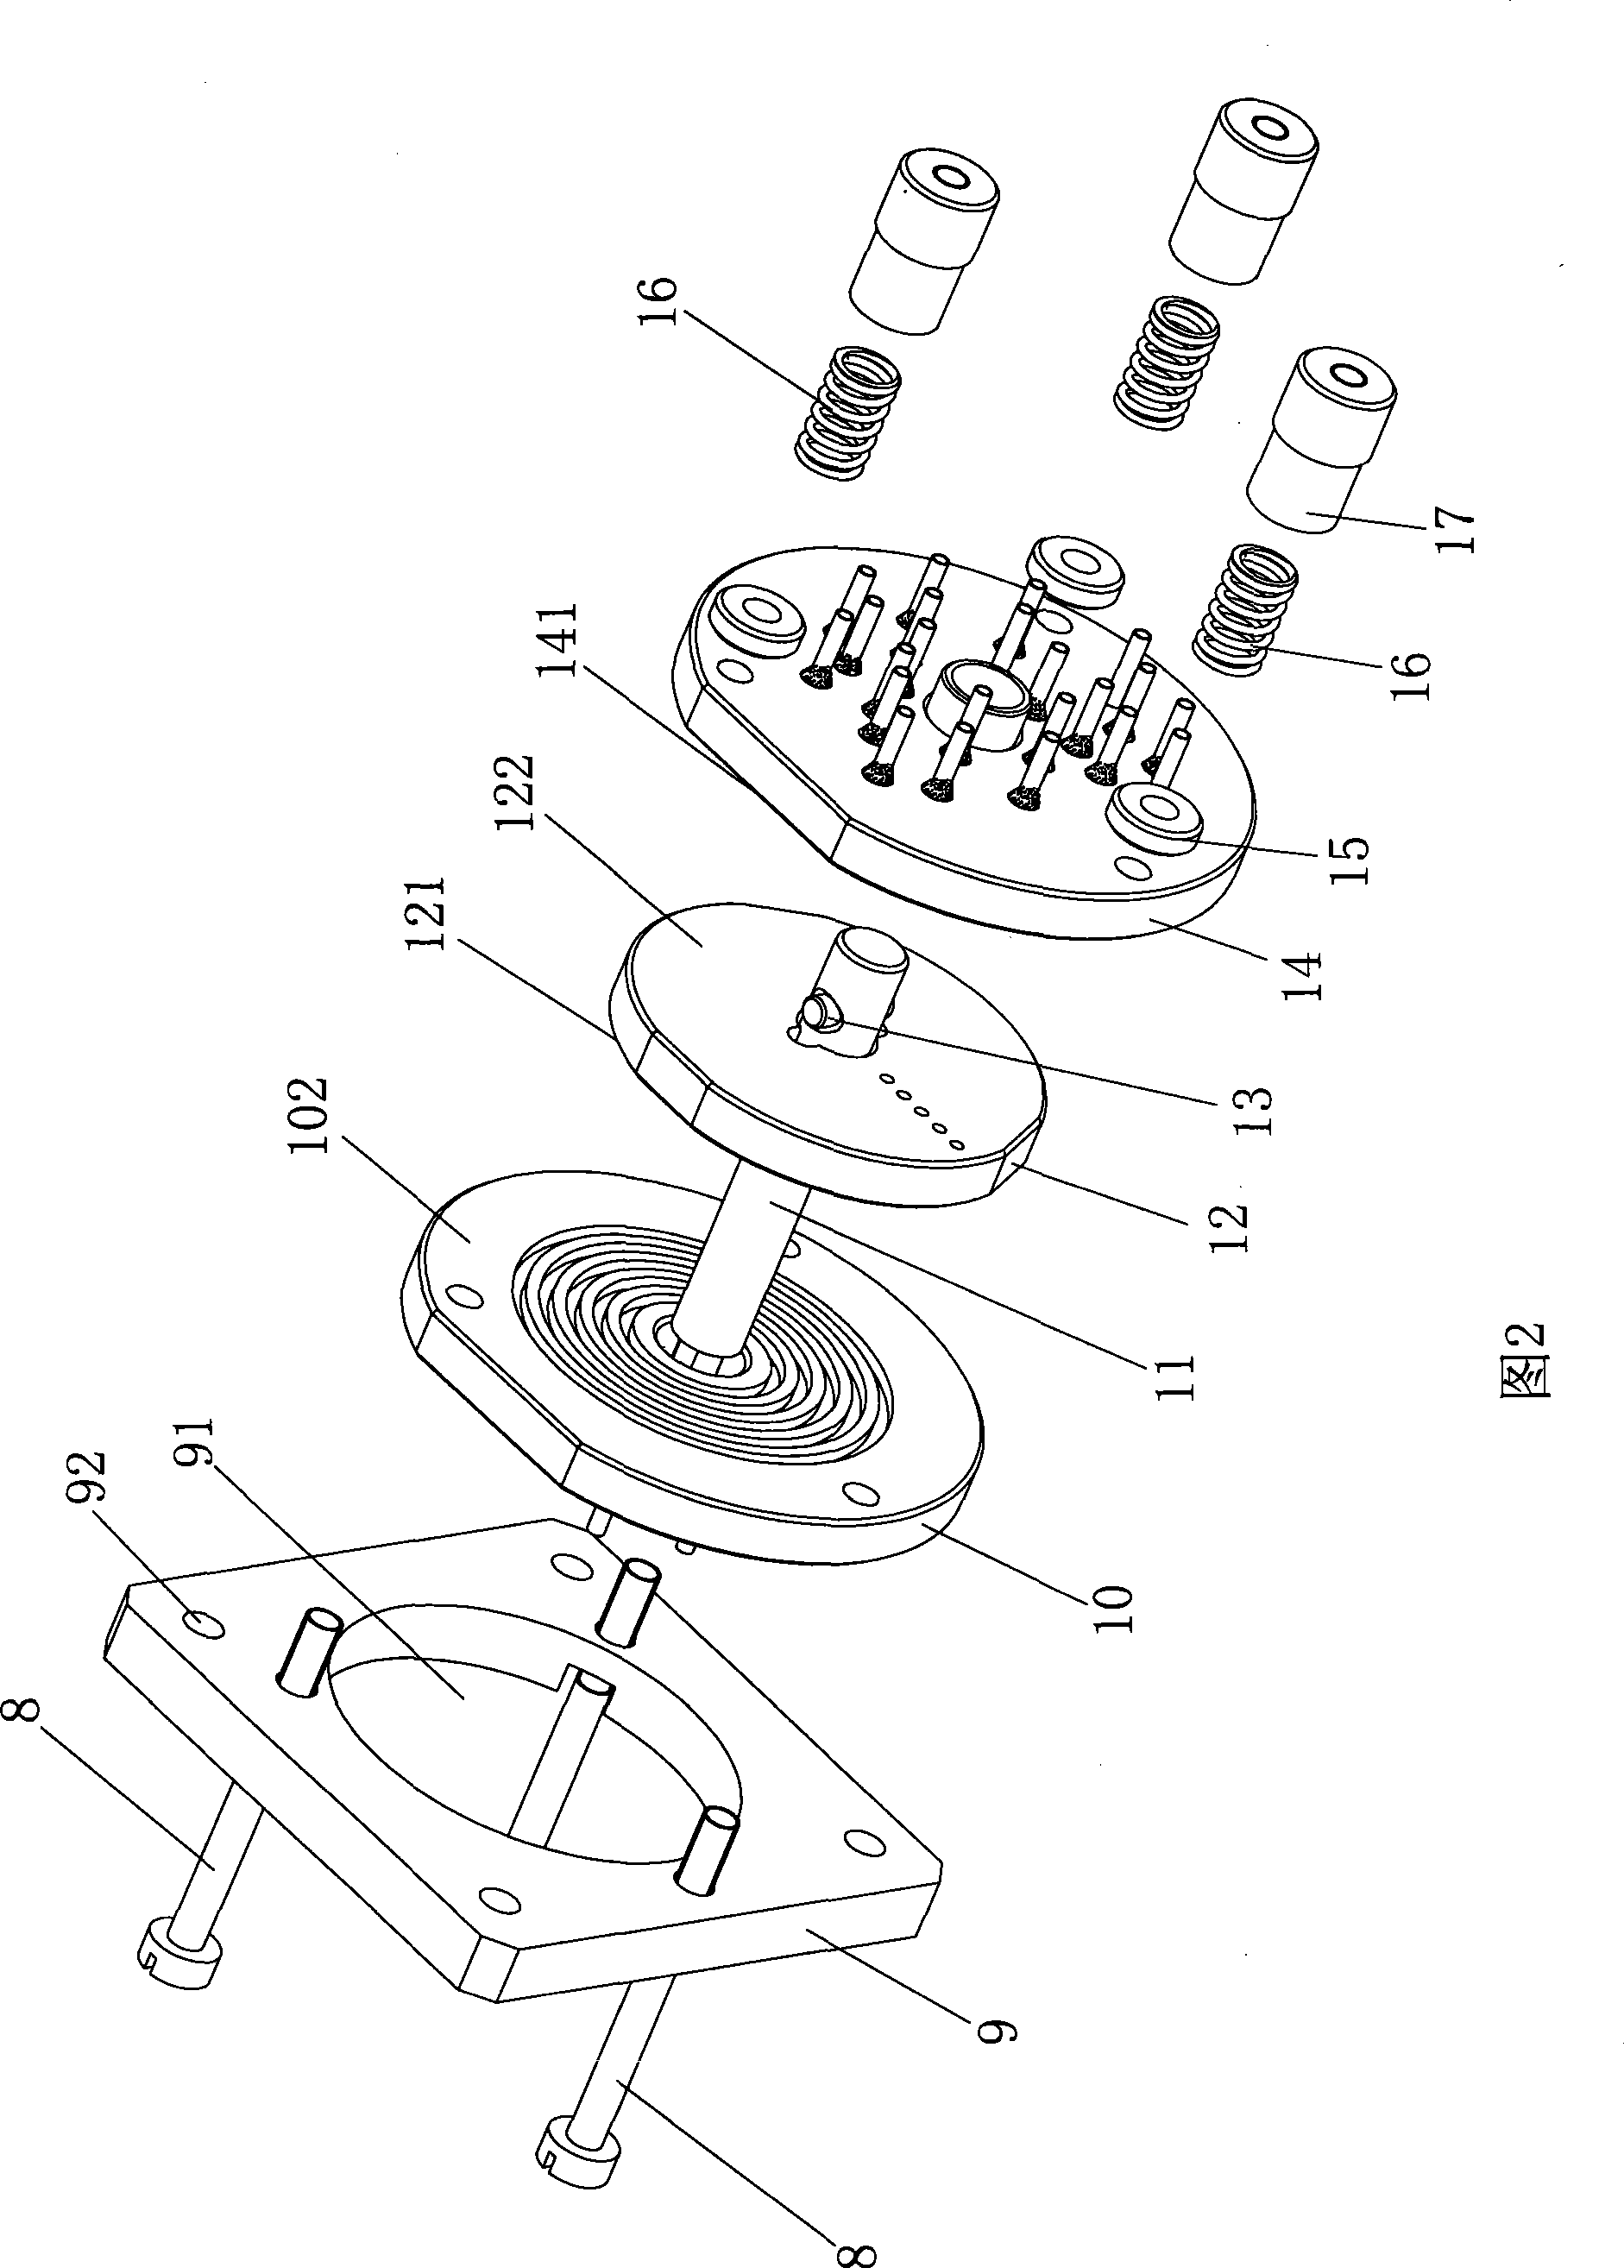 Rotary integrated valve